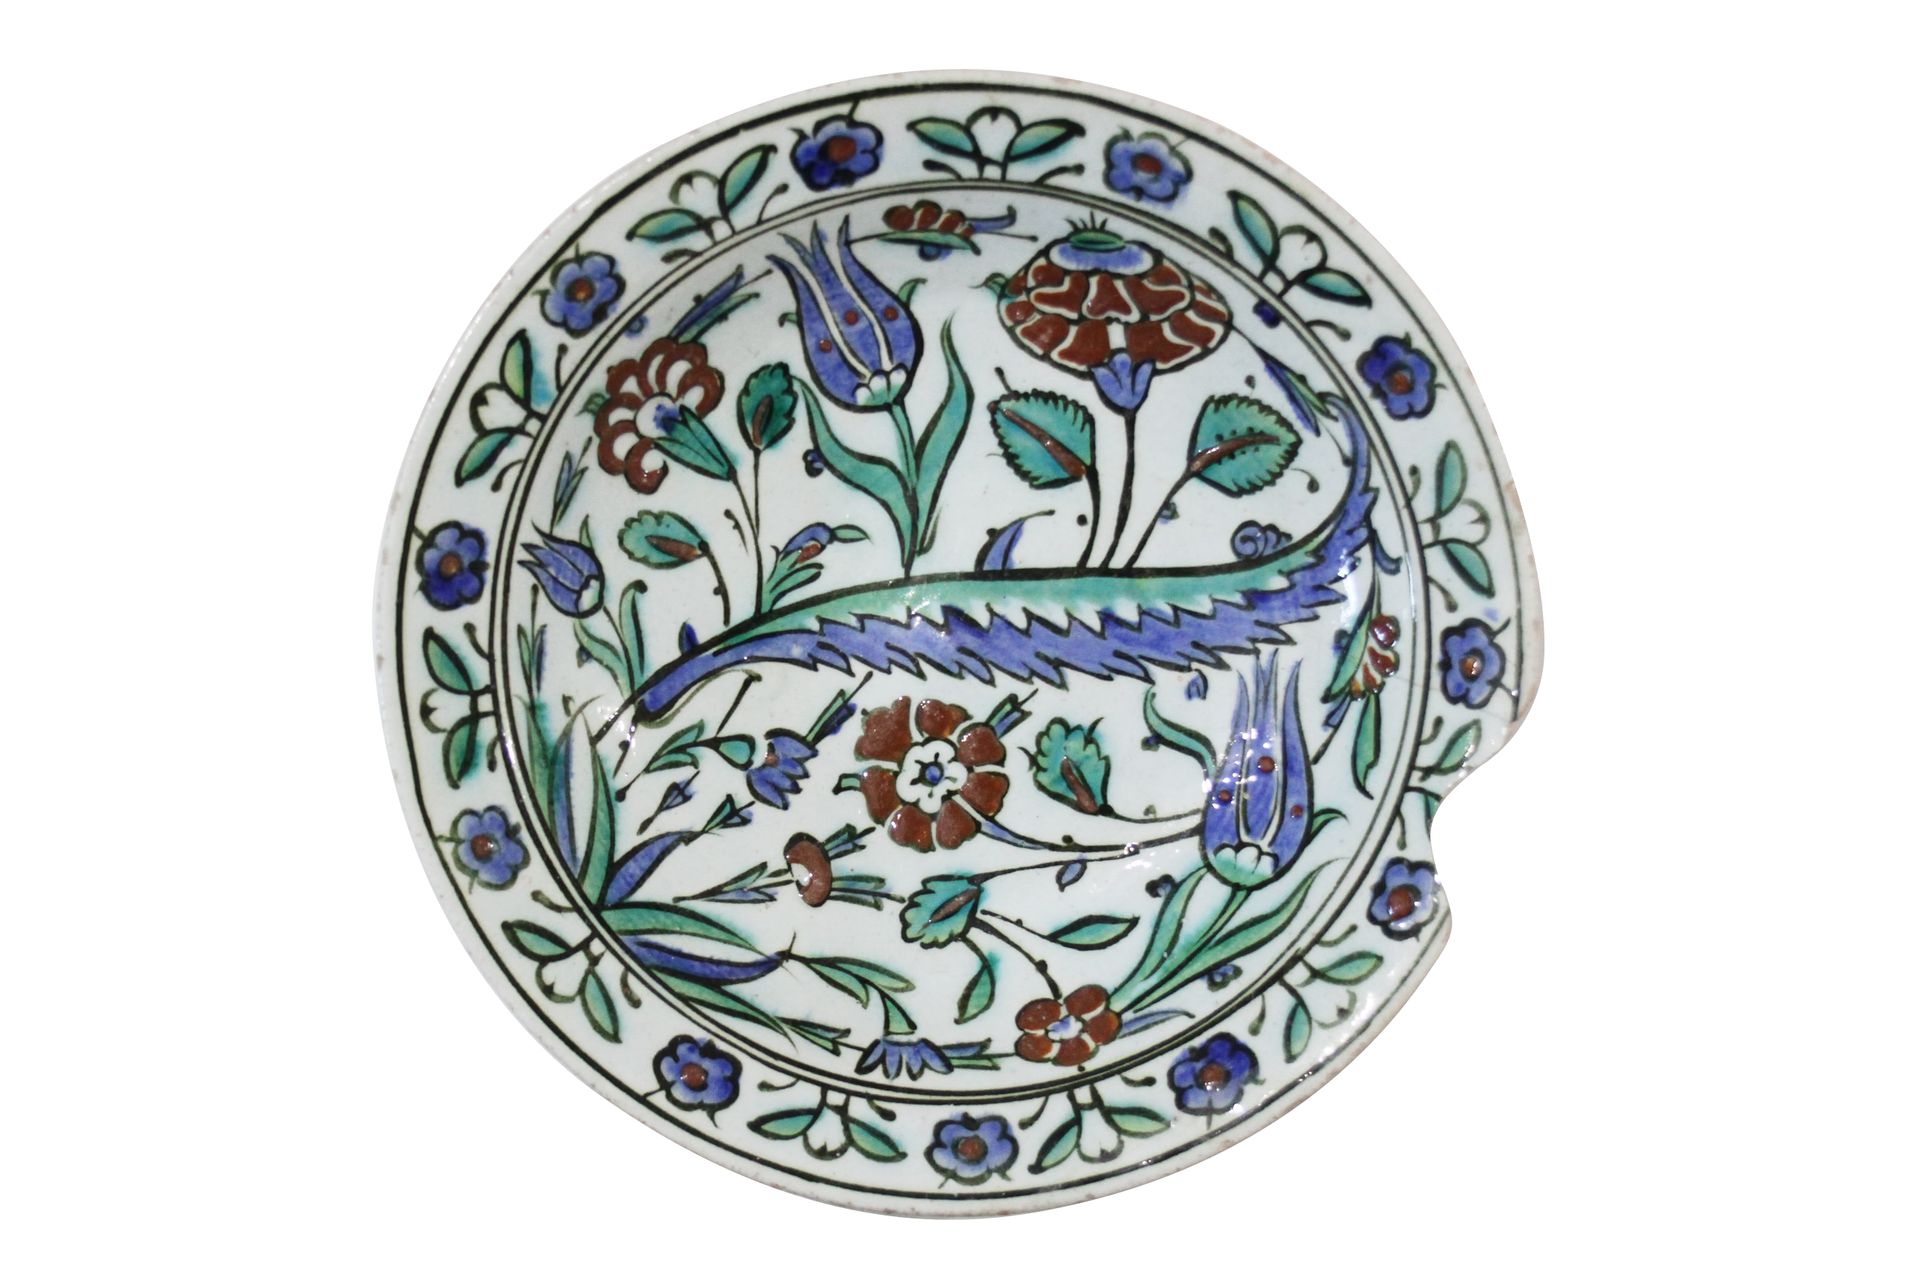 A circa 1750 Iznik bowl 一个大约1750年的Iznik碗，用釉下钴蓝、绿色和锰色绘画。土耳其人。高6.5厘米，直径30厘米。如照片所示，&hellip;